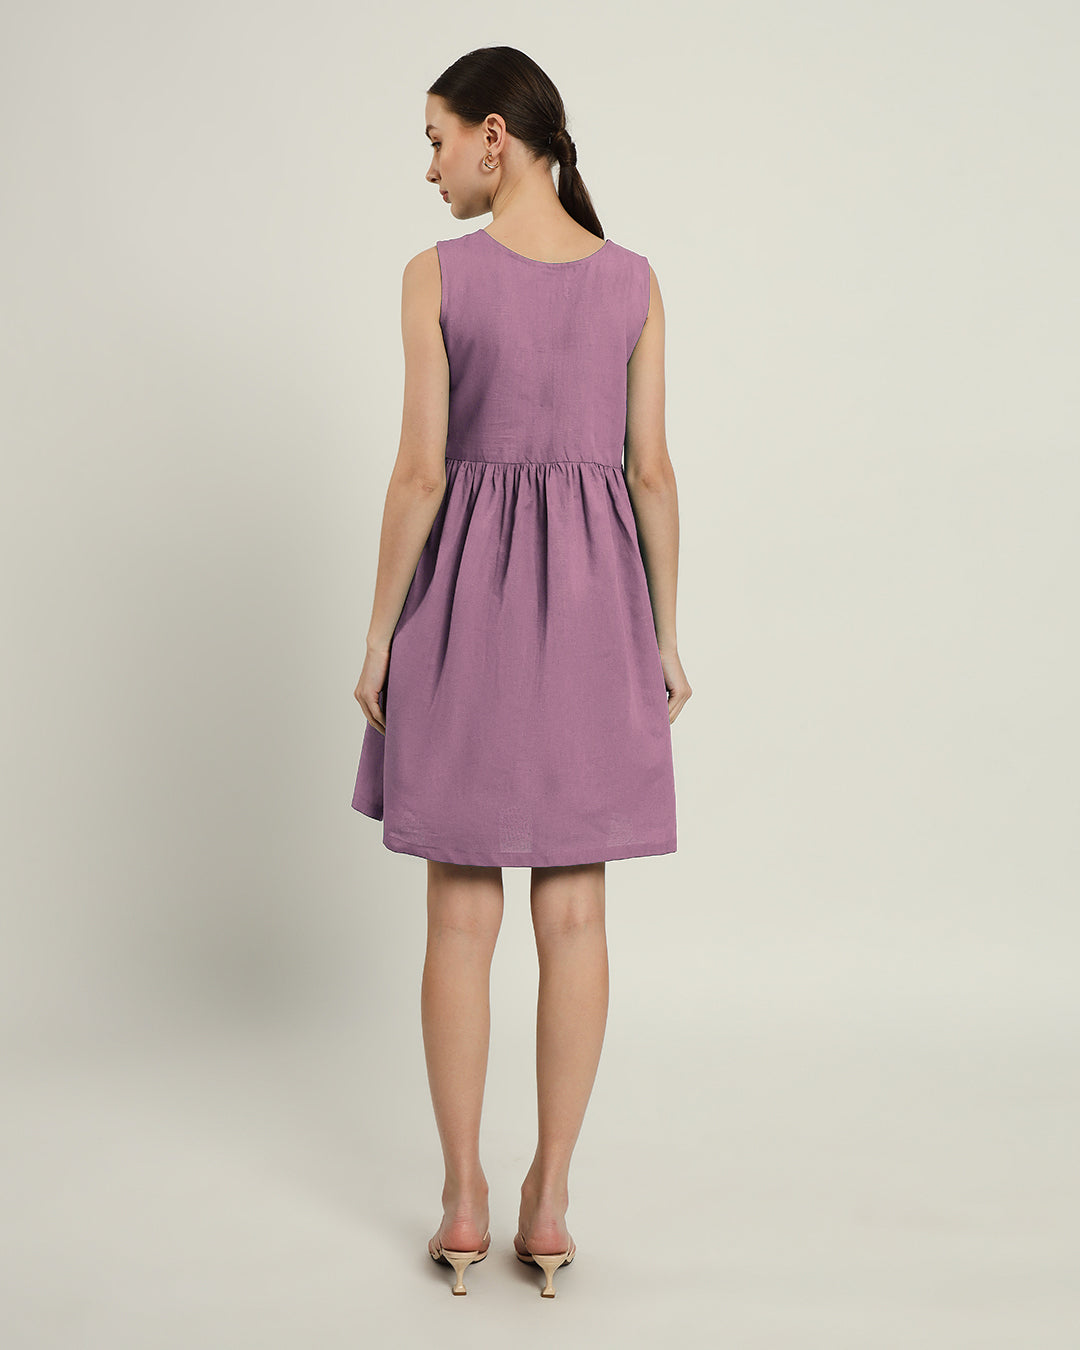 The Chania Purple Swirl Cotton Dress